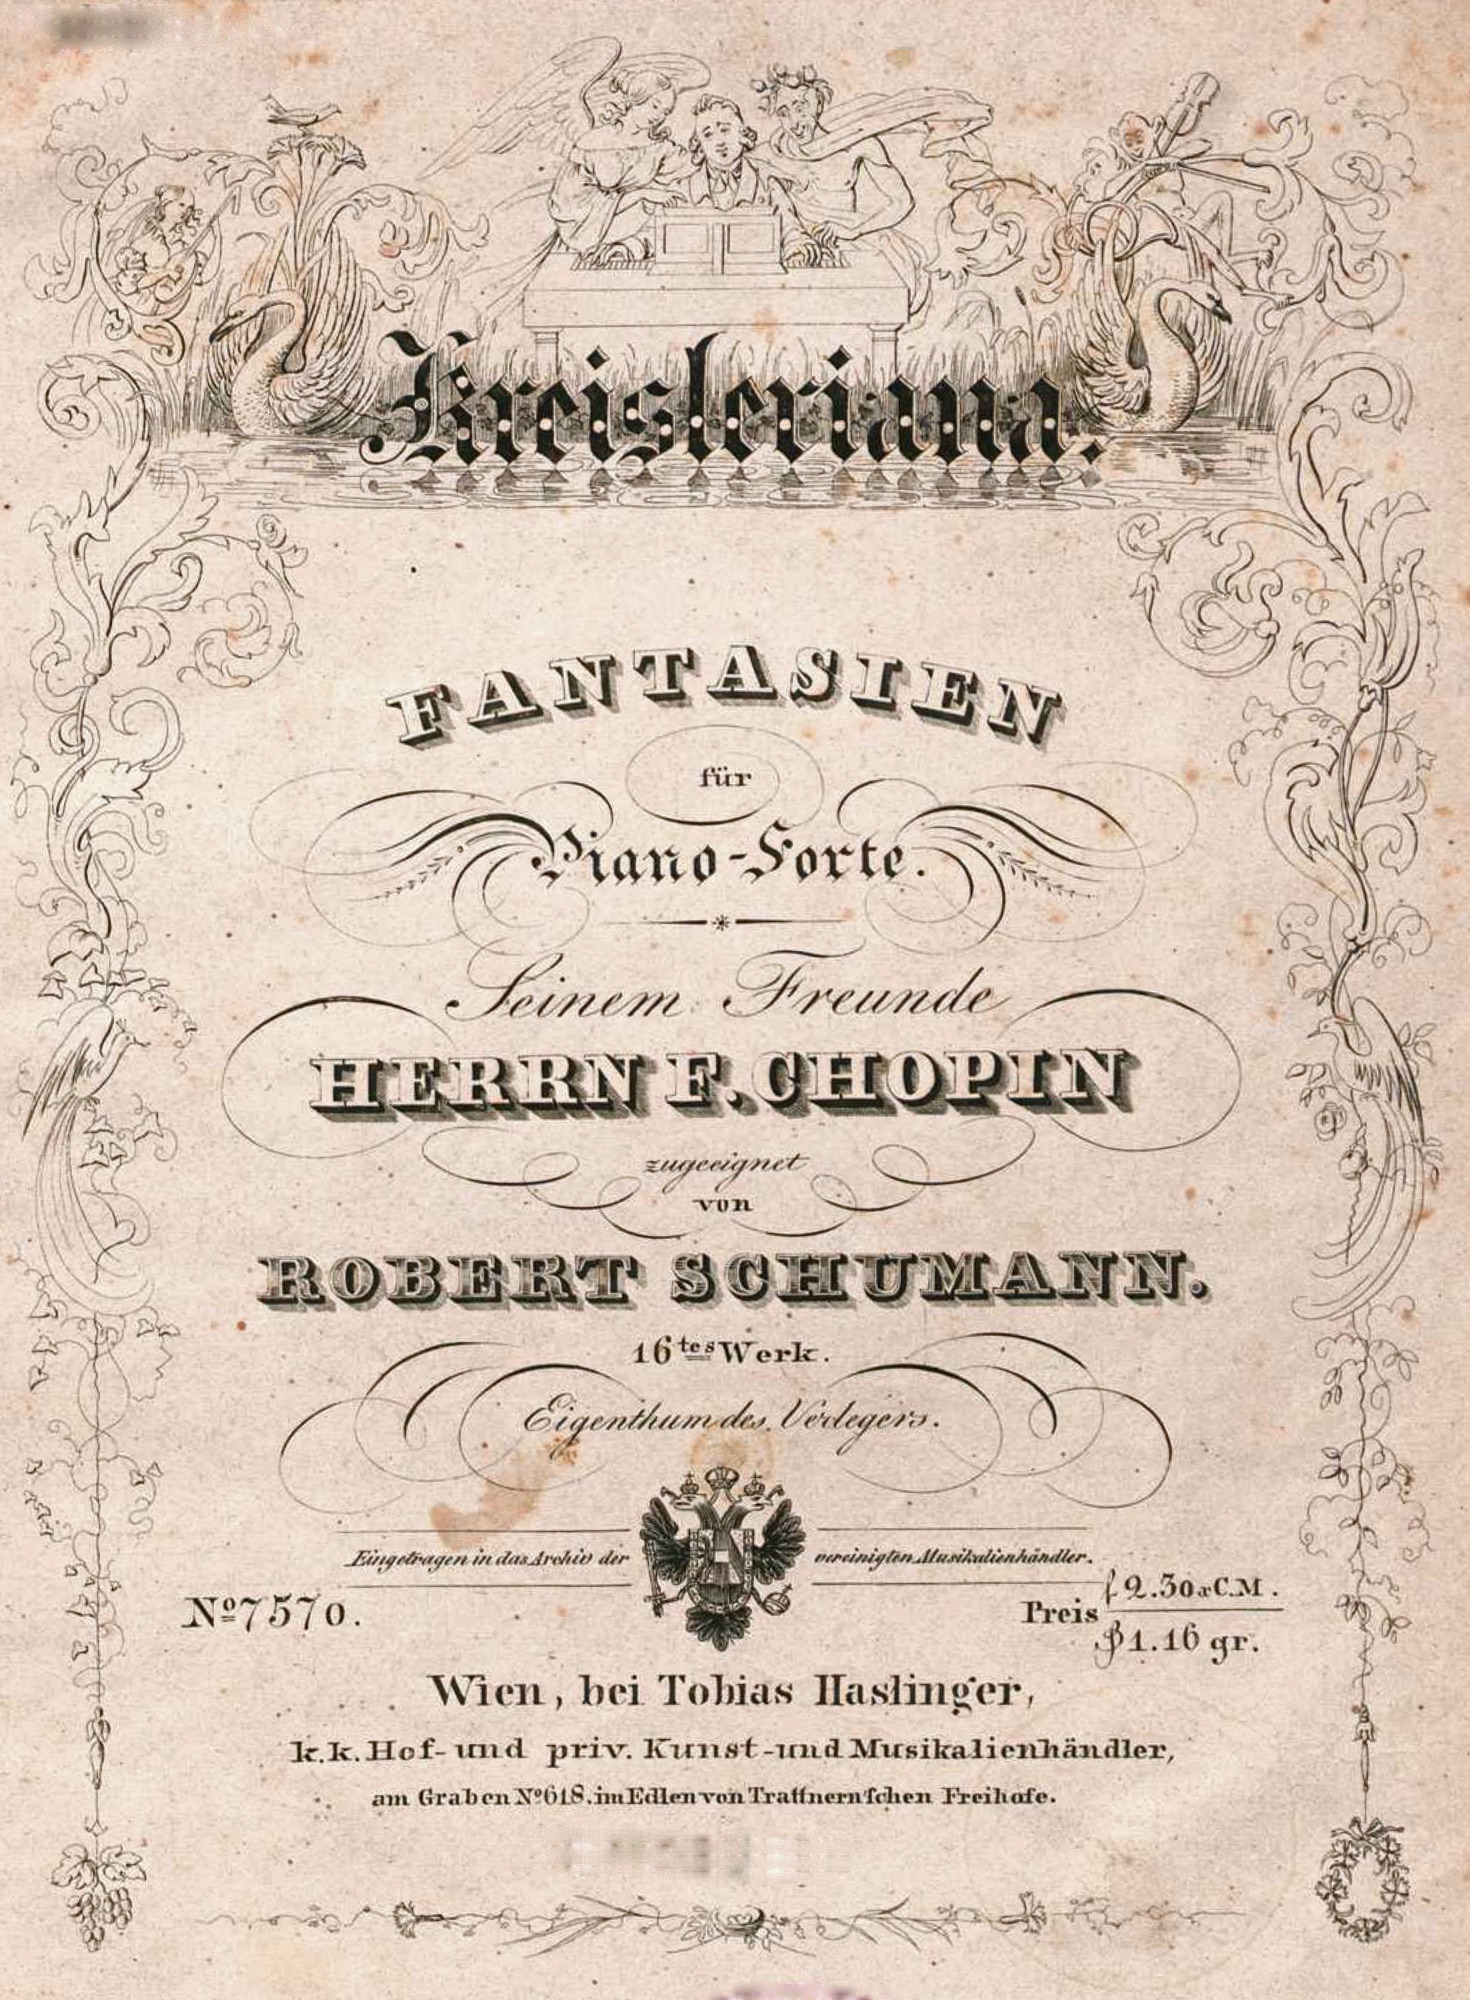 Schumann Kreisleriana with dedication to Chopin